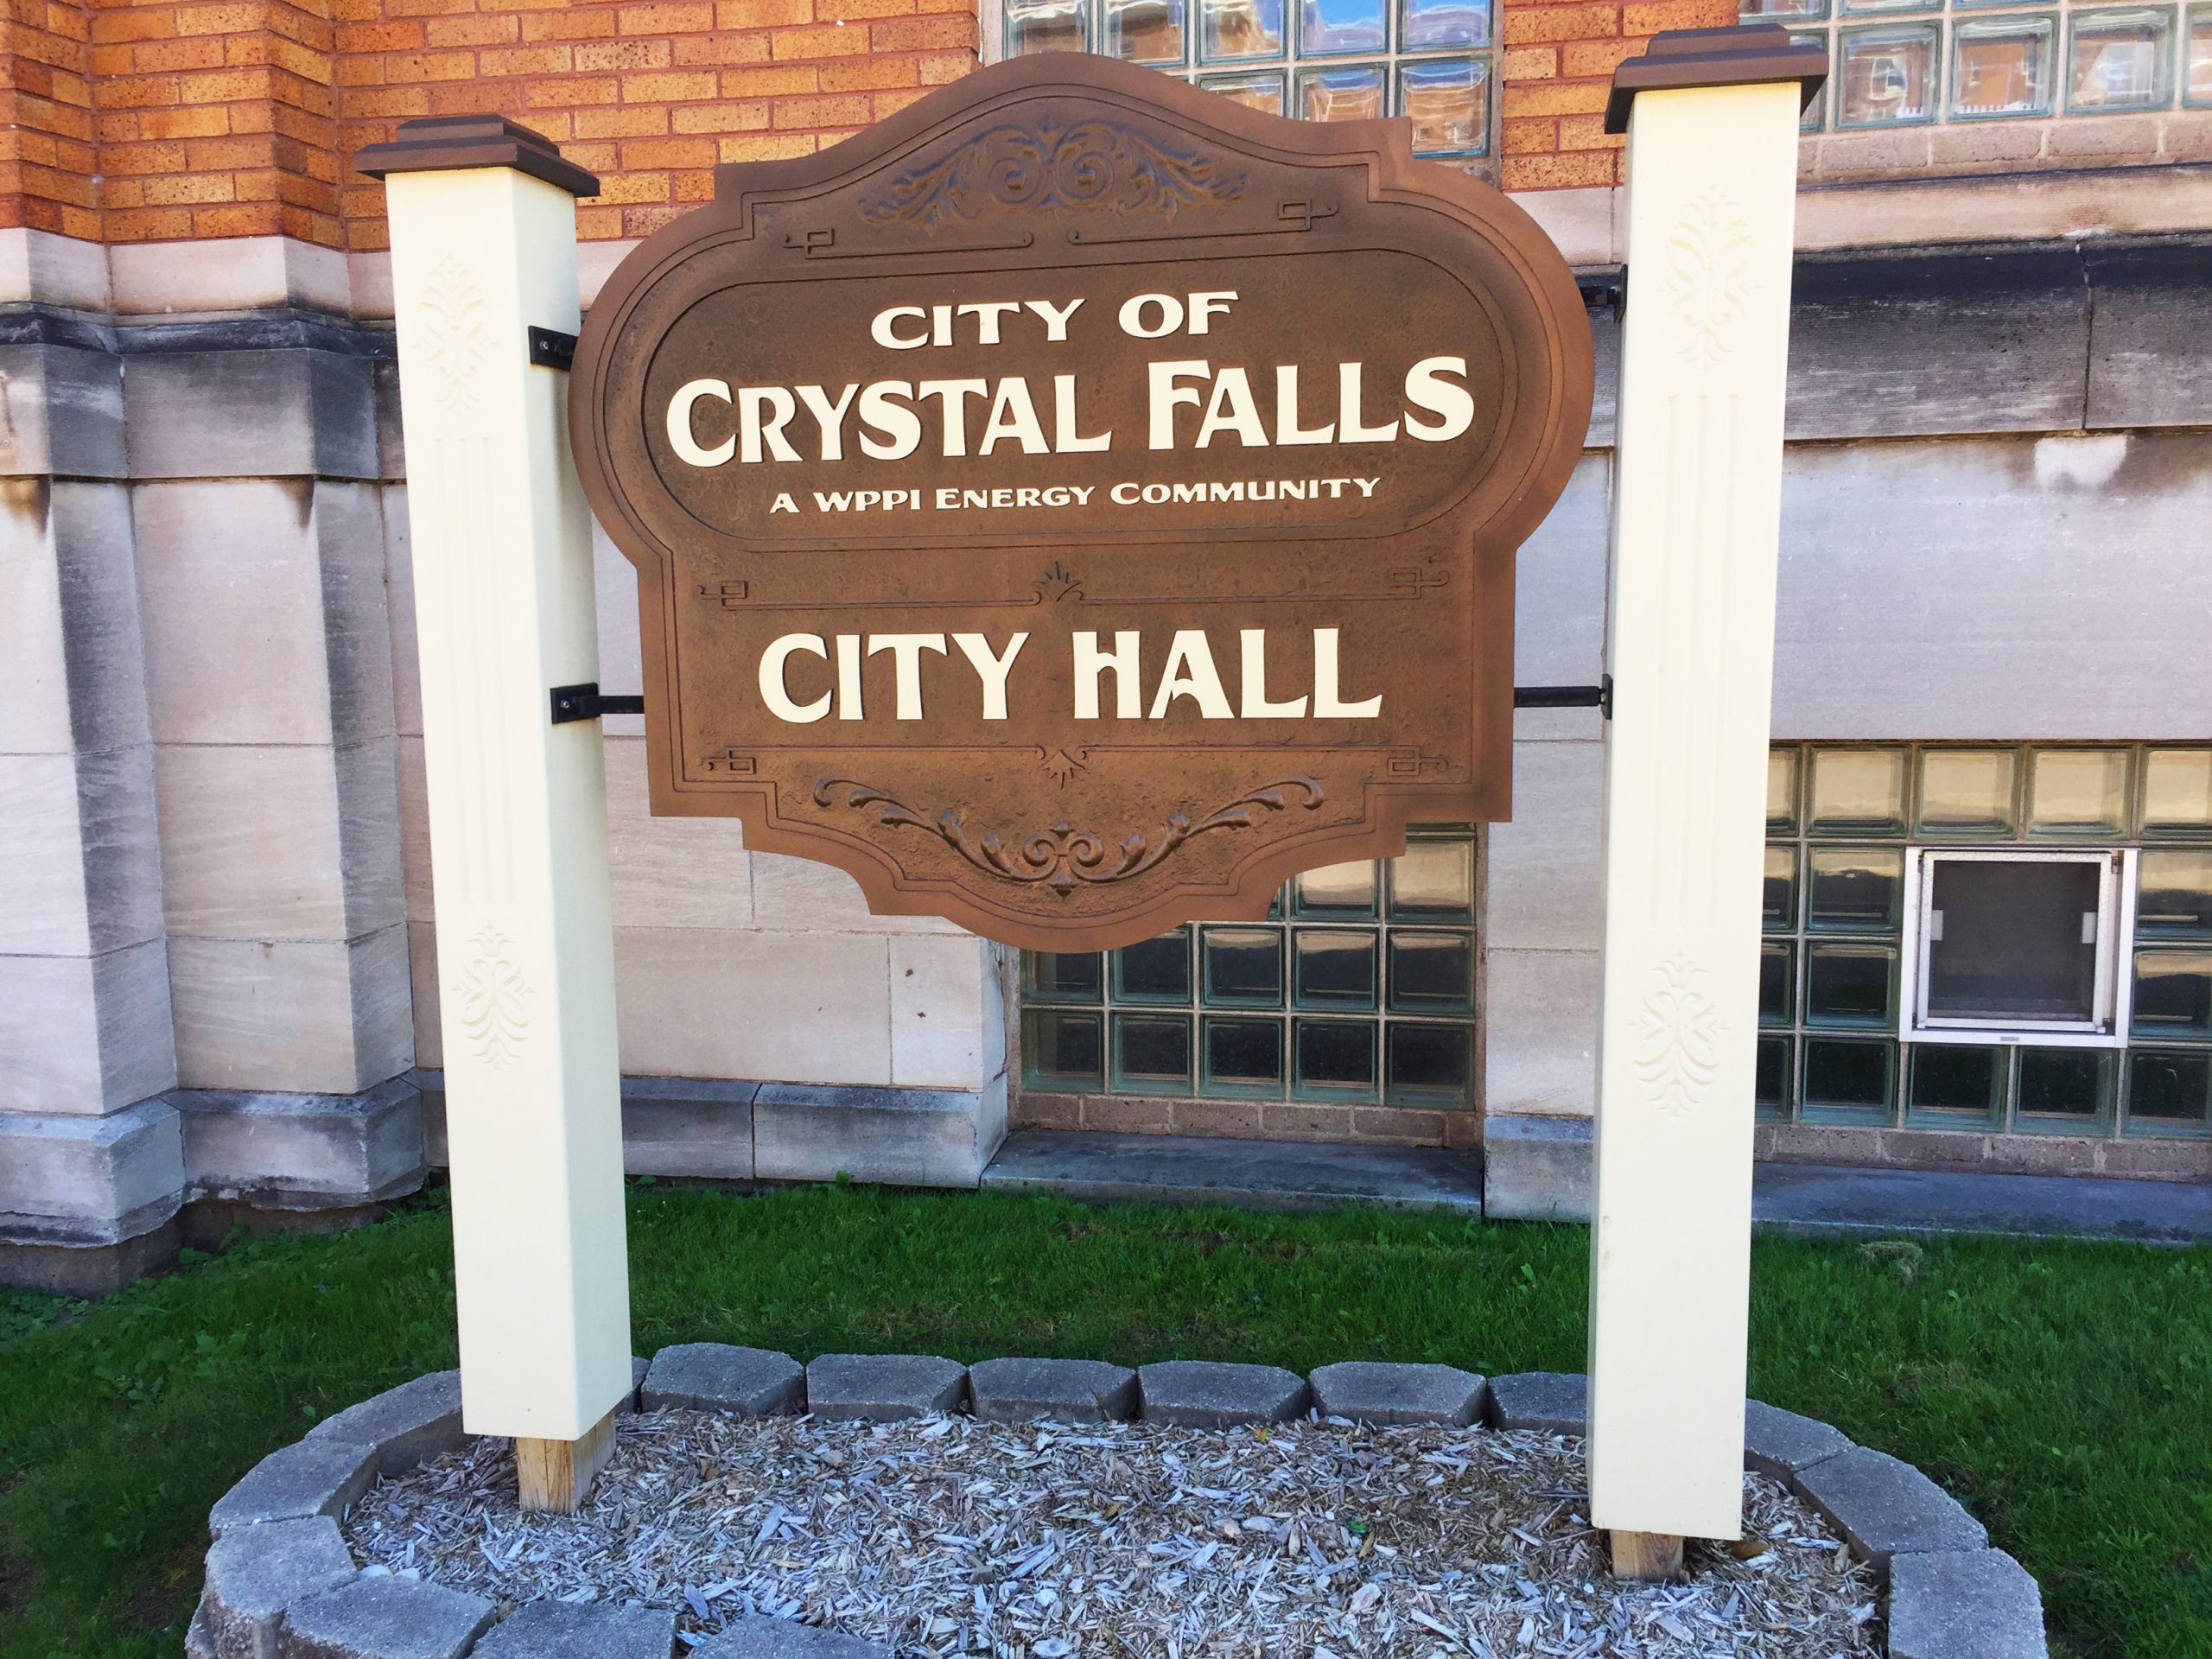 City of Crystal Falls City Hall sign